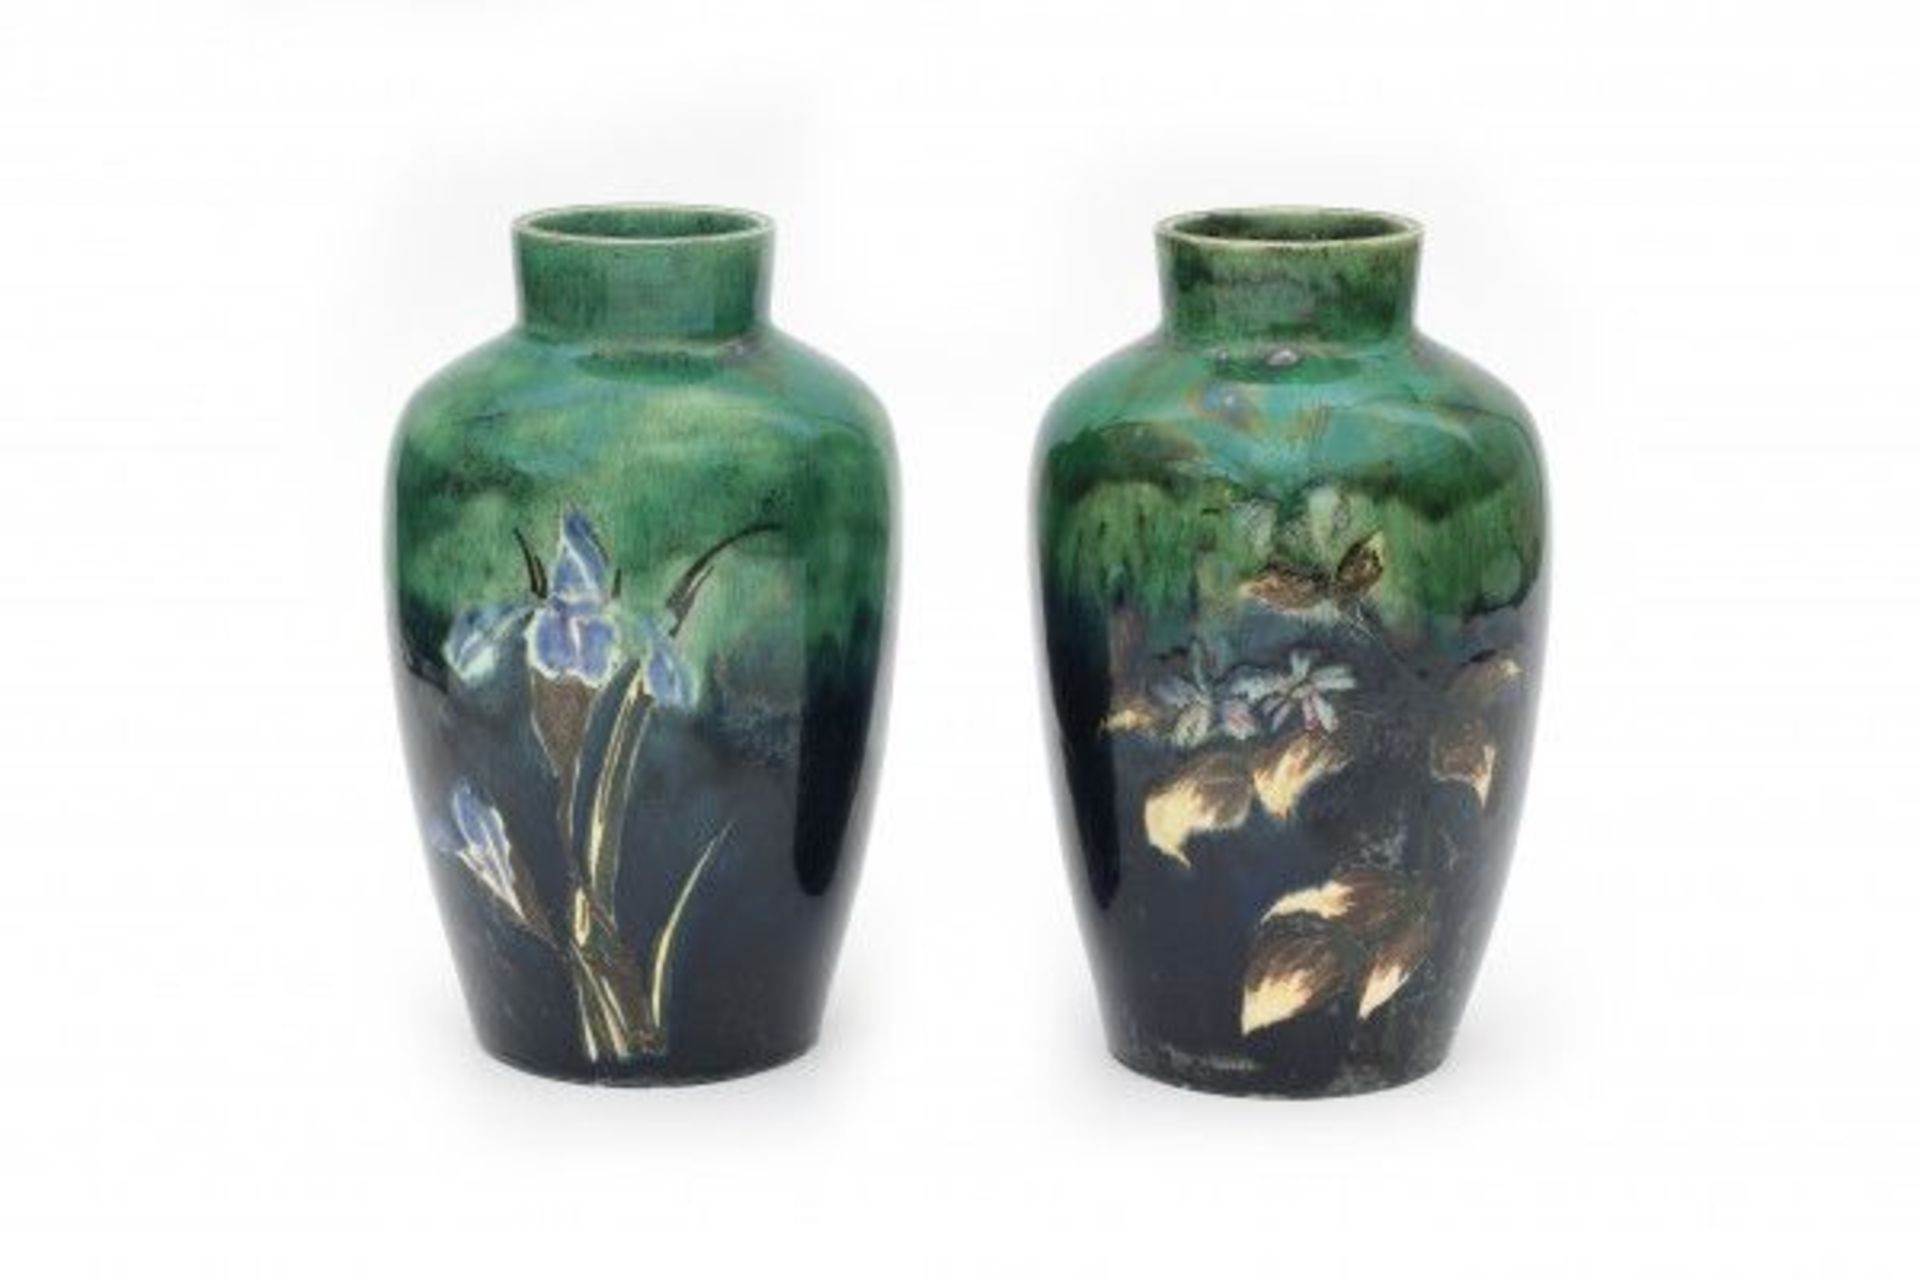 N.V. Haagsche Plateelfabriek Rozenburg, Den Haag (1883-1917)Two ceramic vases decorated with